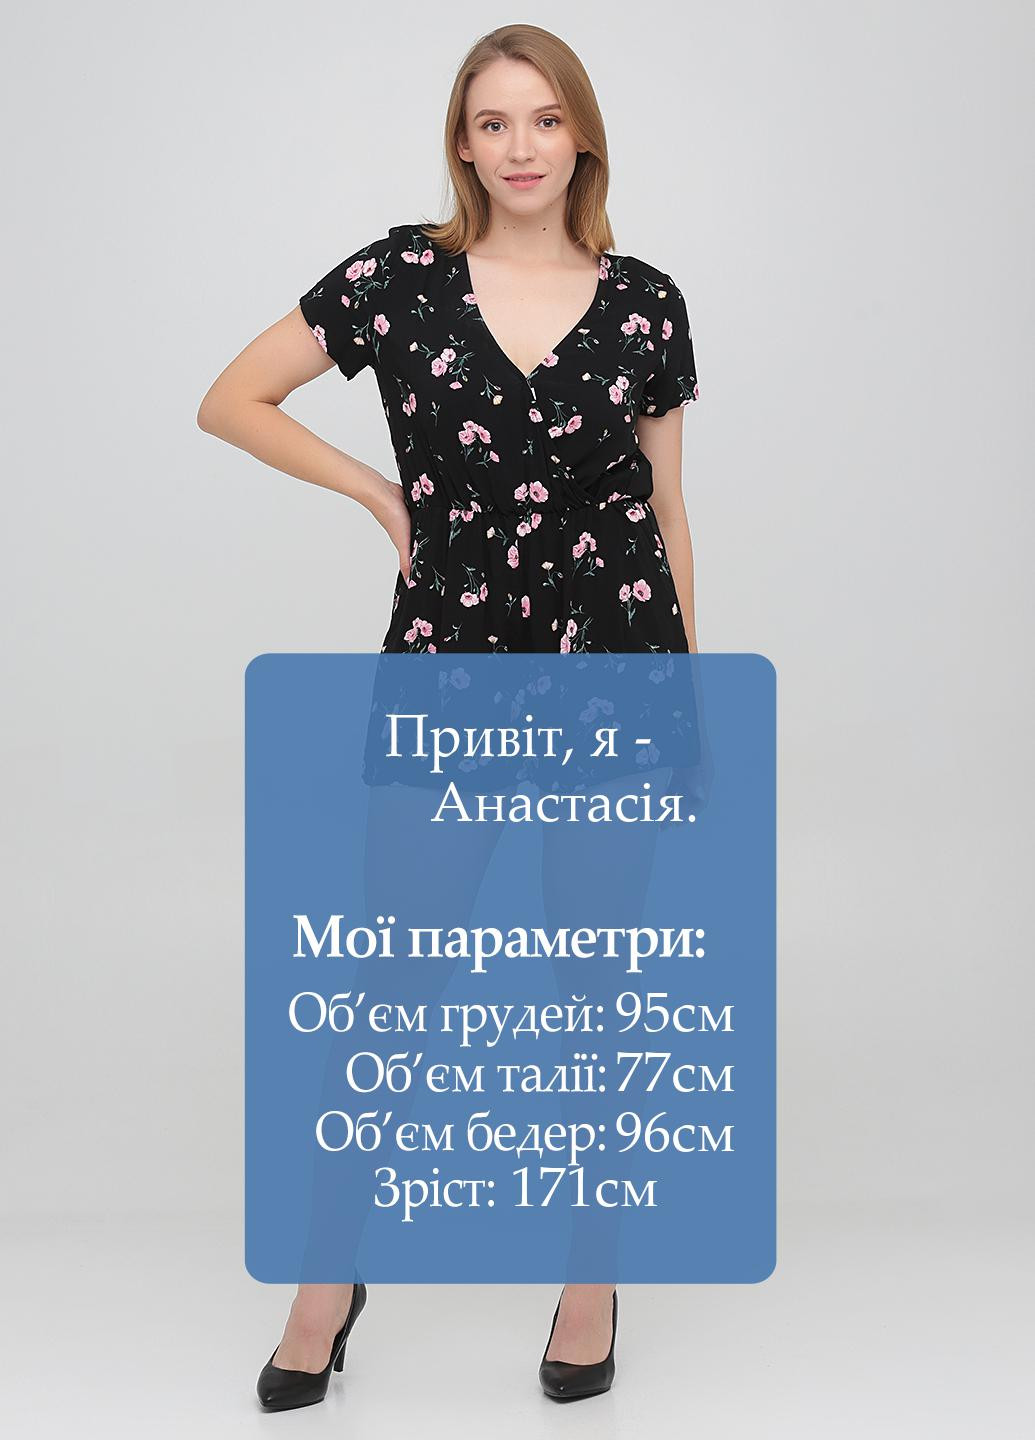 Комбинезон H&M комбинезон-шорты цветочный чёрный кэжуал вискоза